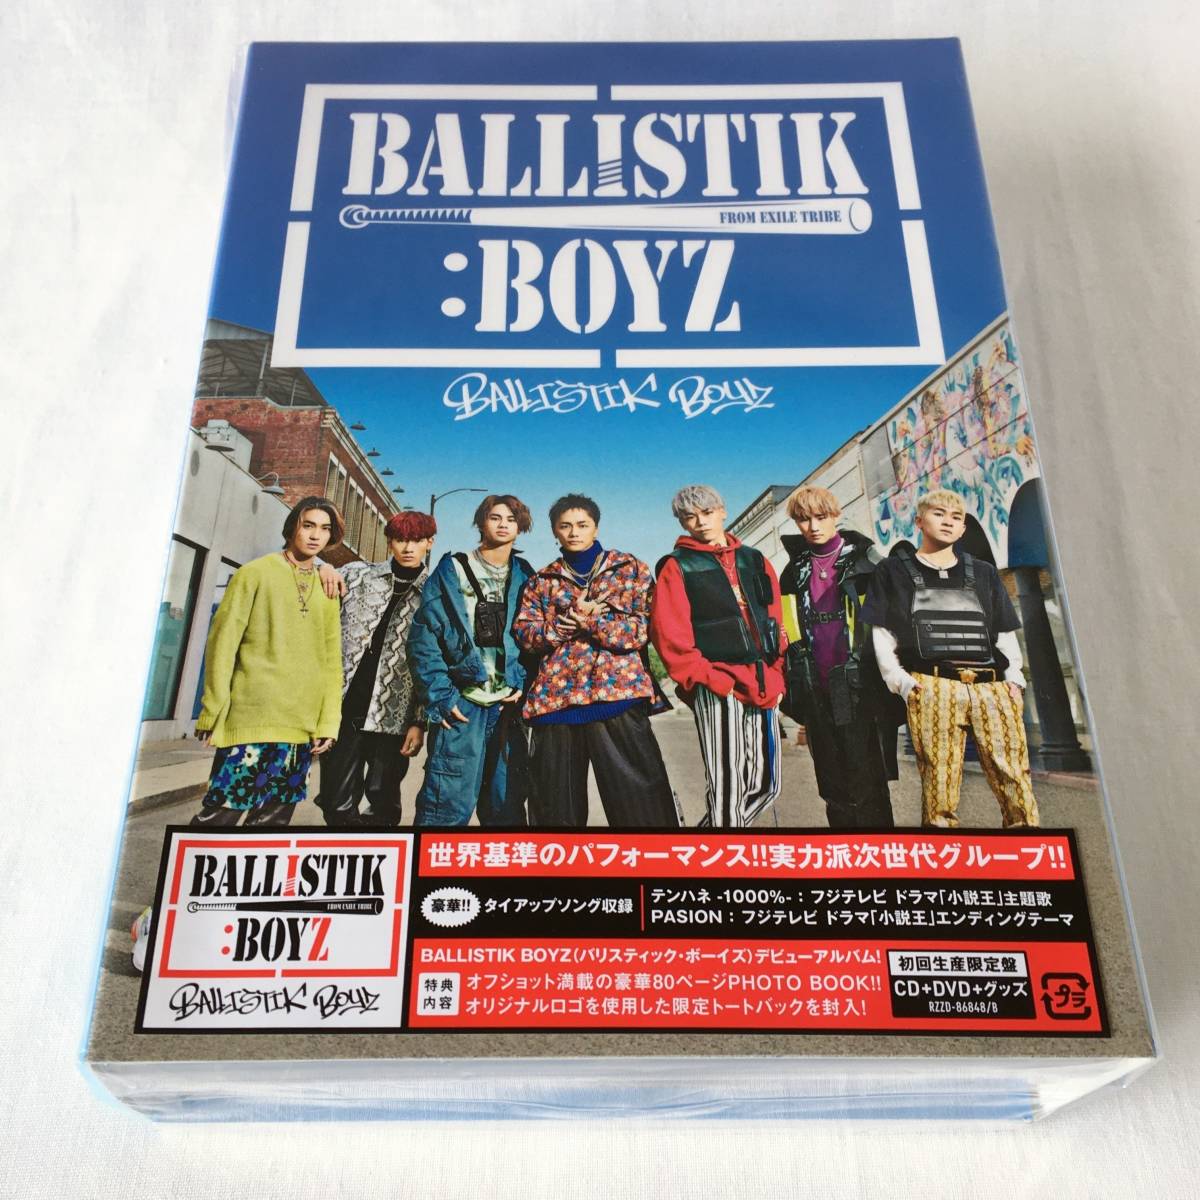 ヤフオク! - BALLISTIK BOYZ from EXILE TRIBE BALLISTIK BOY...